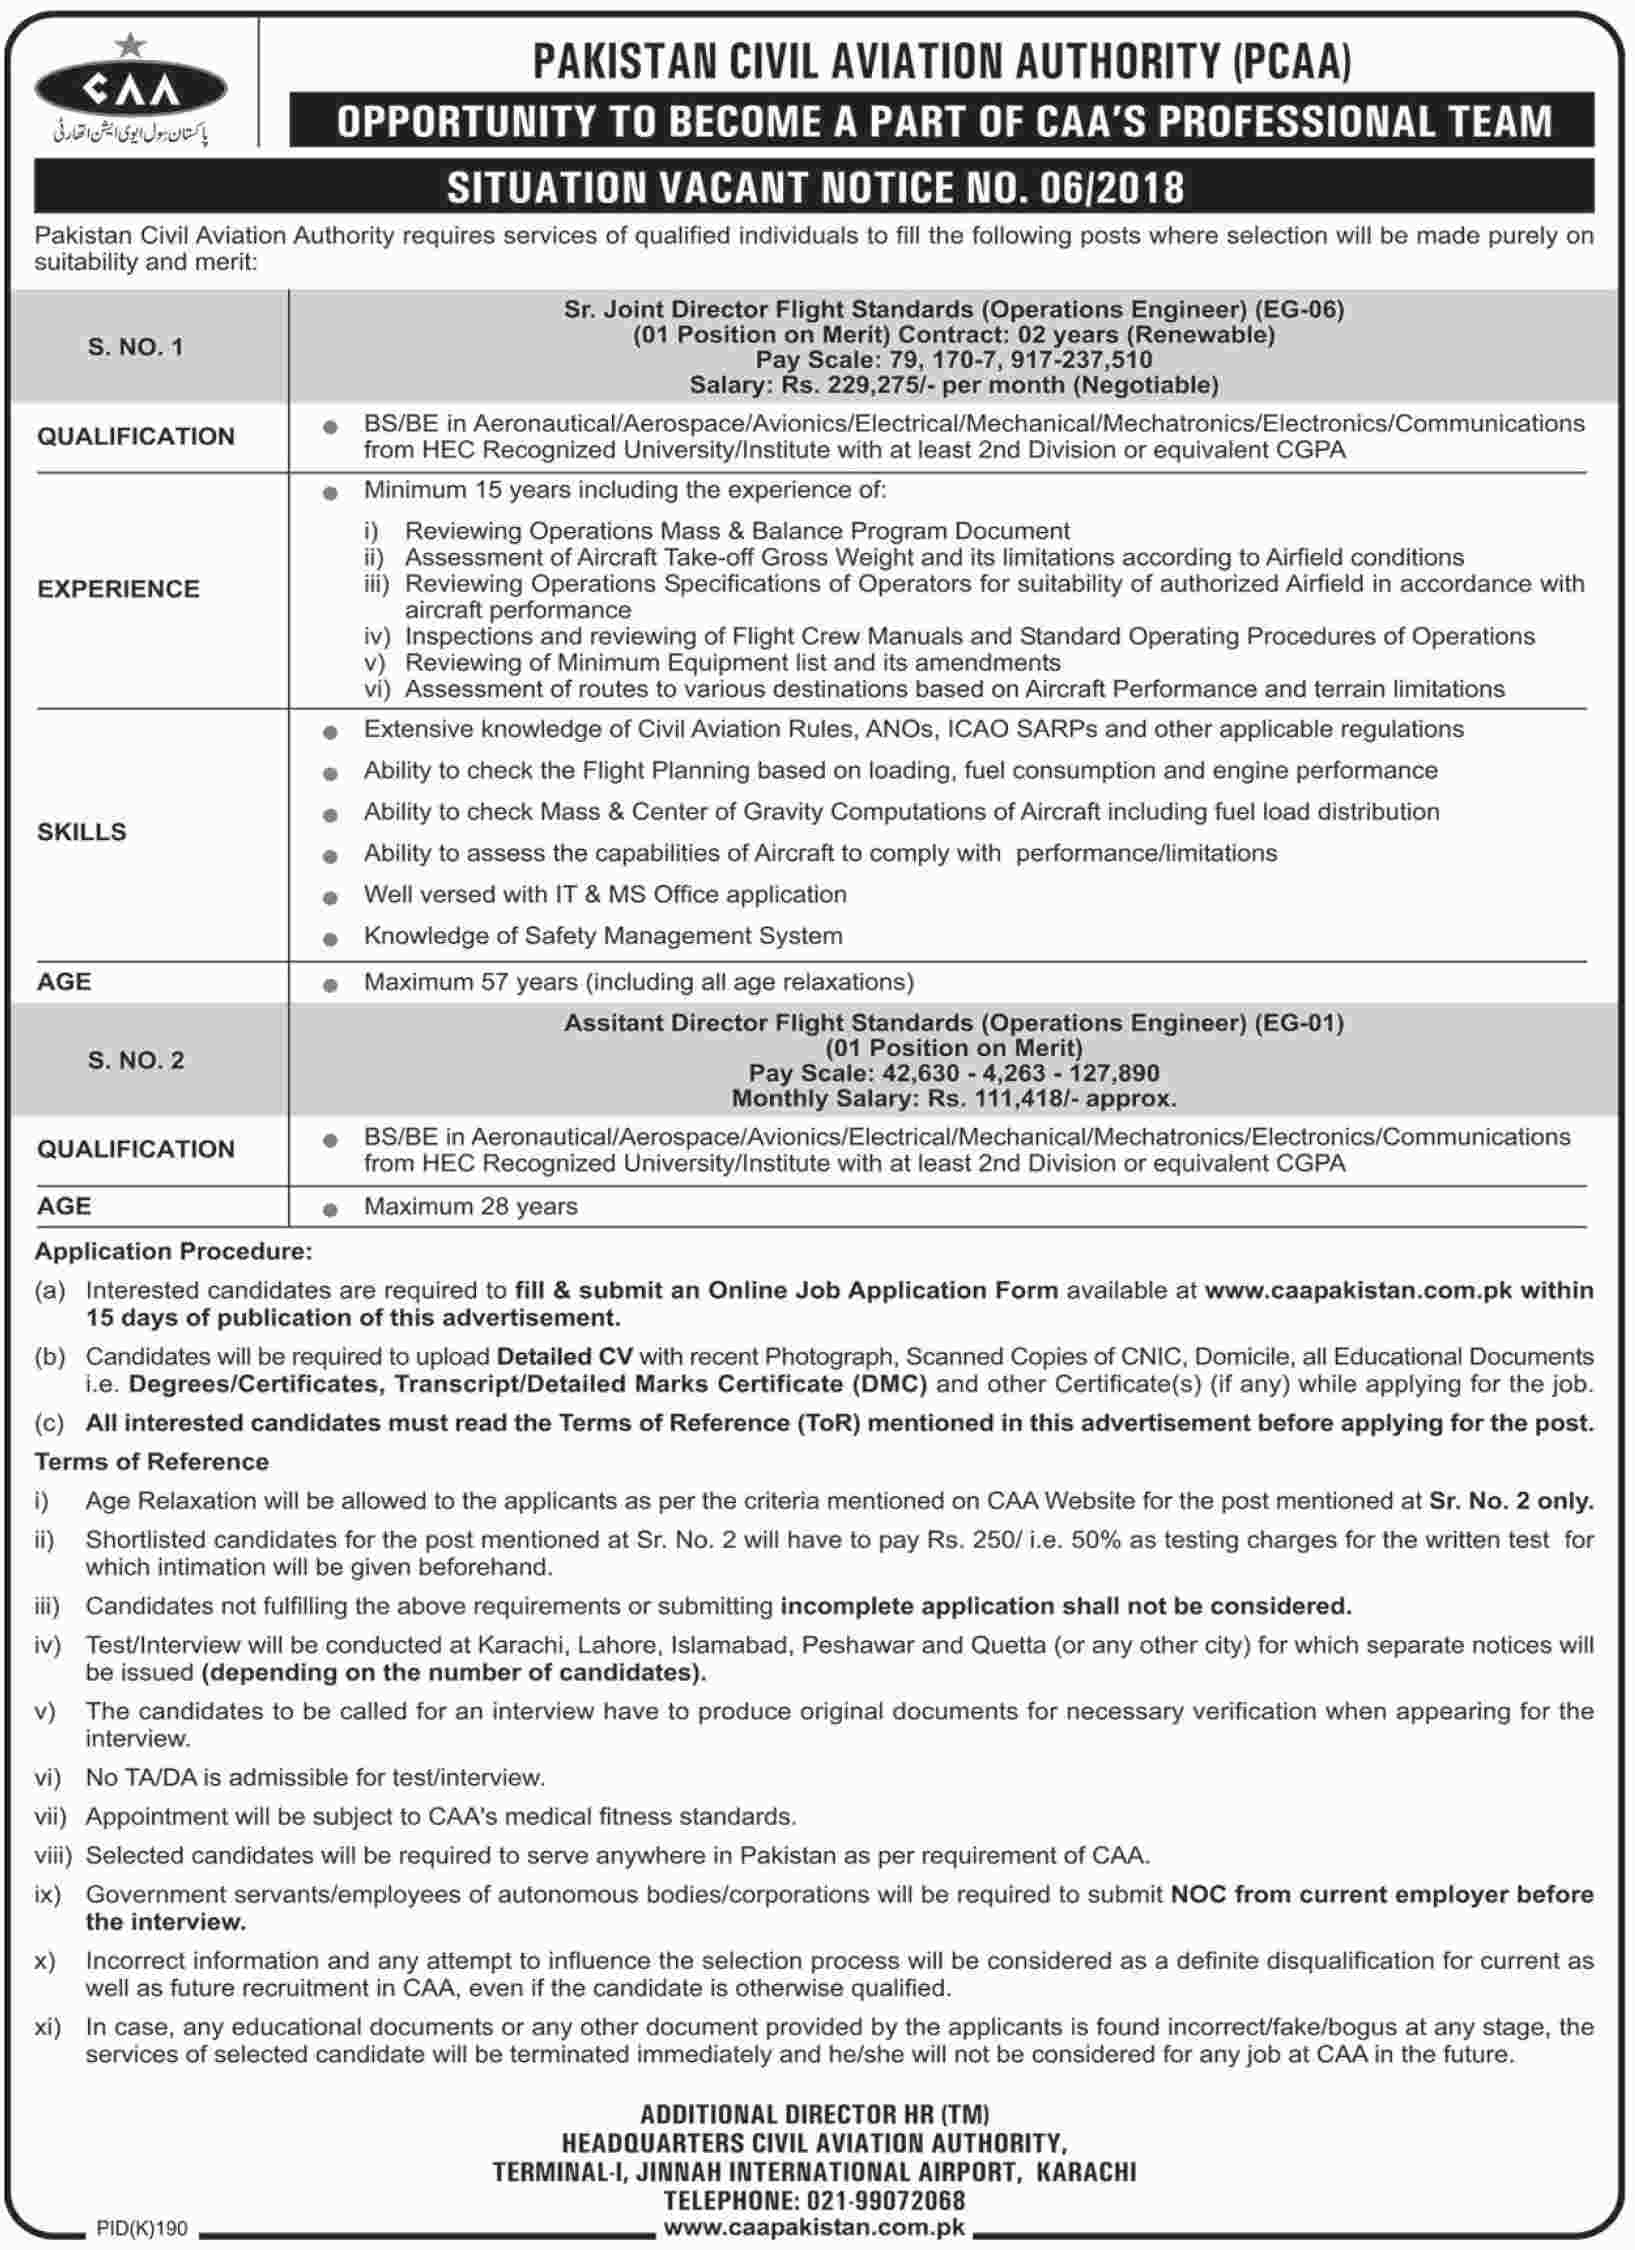 Jobs in Pakistan Civil Aviation Authority 15 July 2018